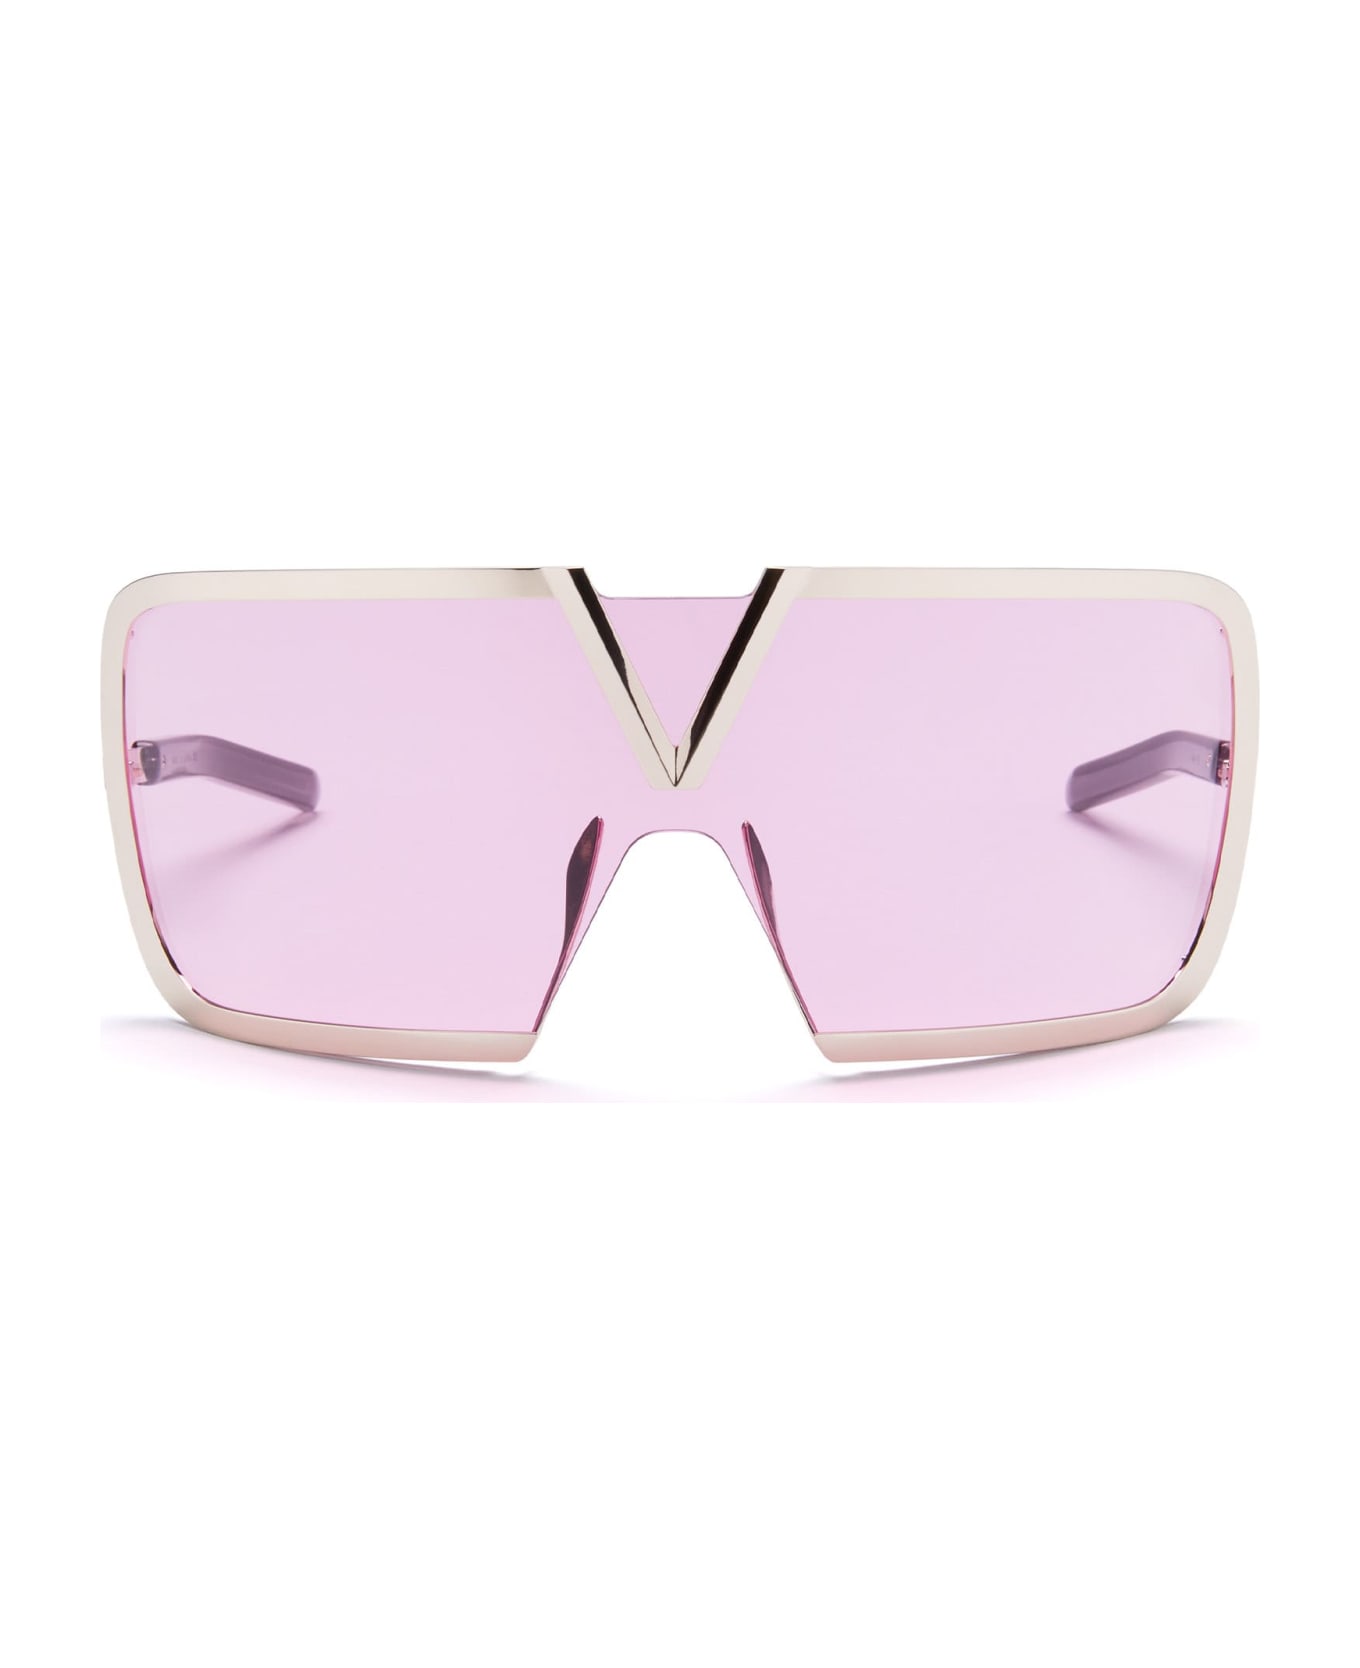 Valentino Eyewear Romask - Romask - White Gold / Crystal Black Sunglasses - Gold